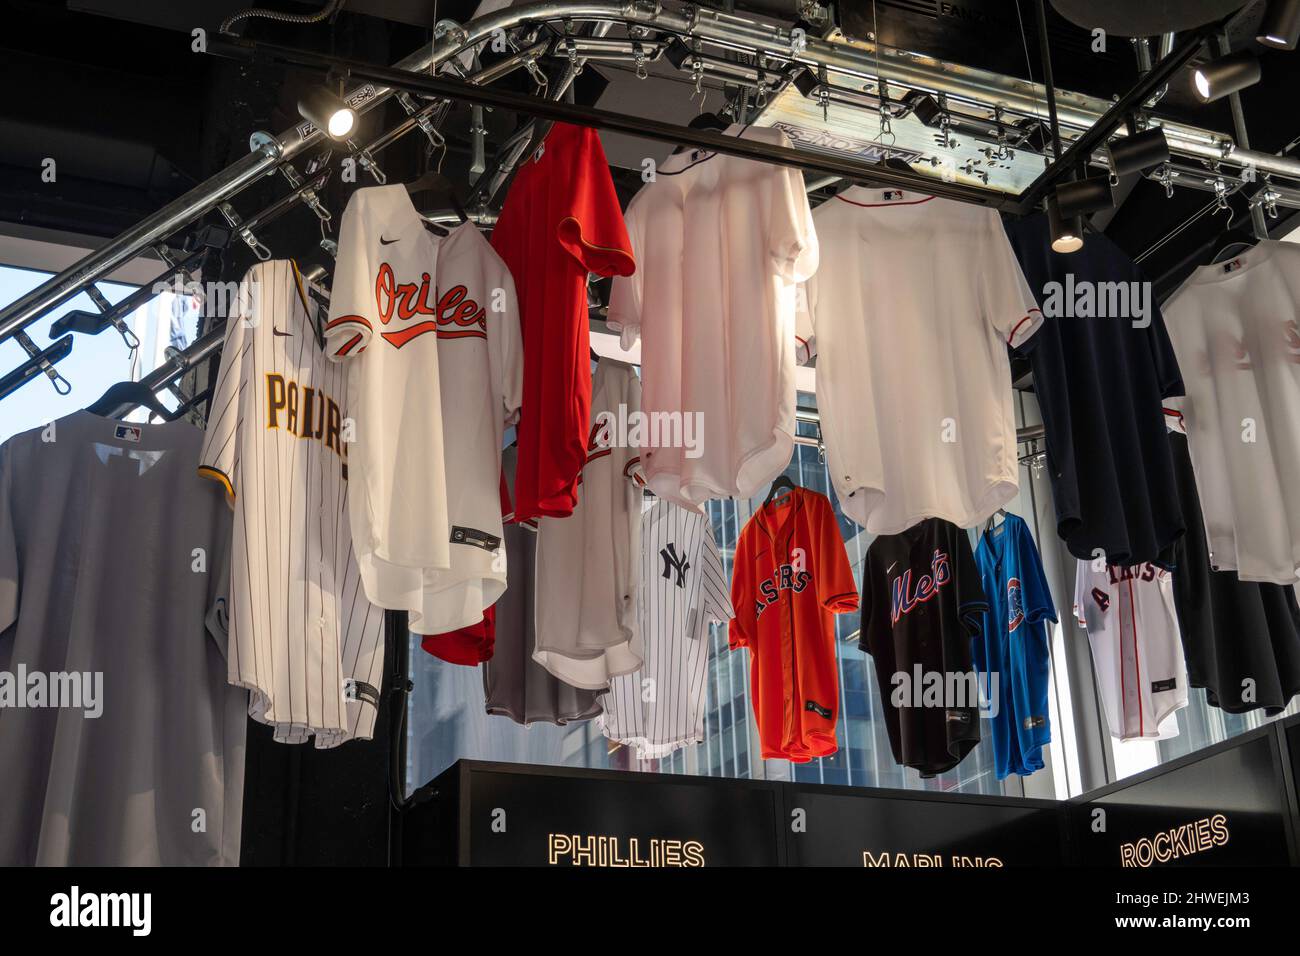 Major League Baseball flagship store in Rockefeller Center, New York City,  USA Stock Photo - Alamy